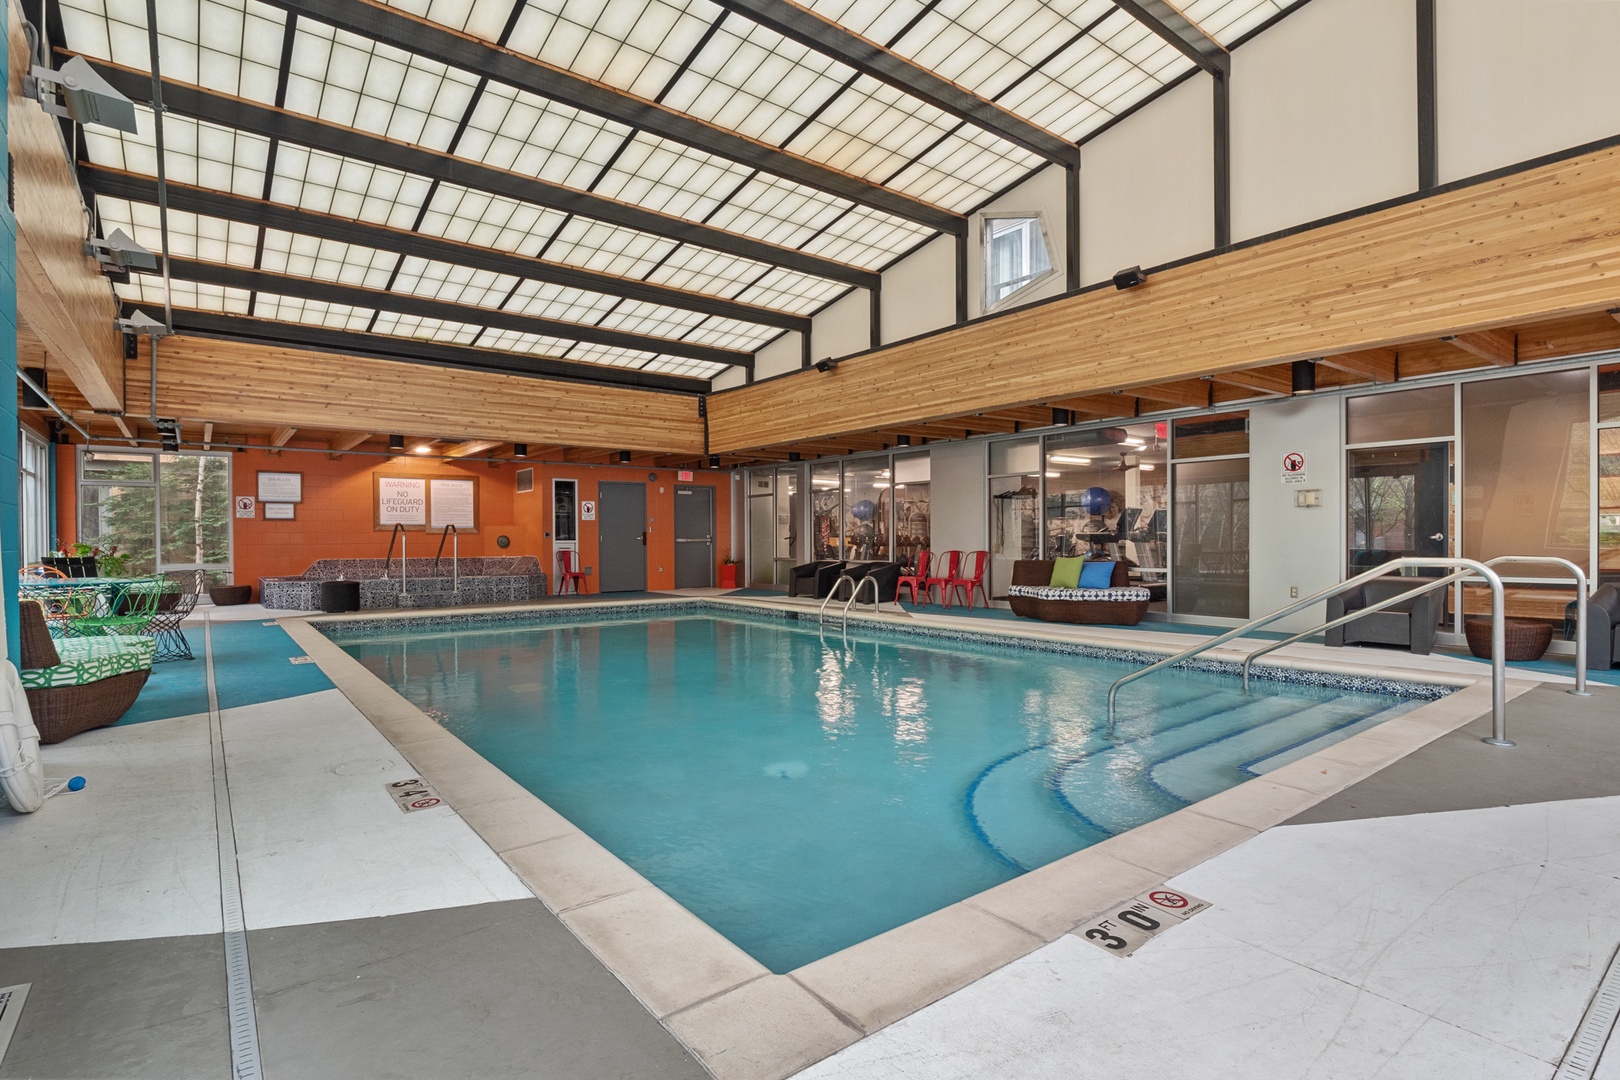 Make a Splash in the Inviting City Club Pool